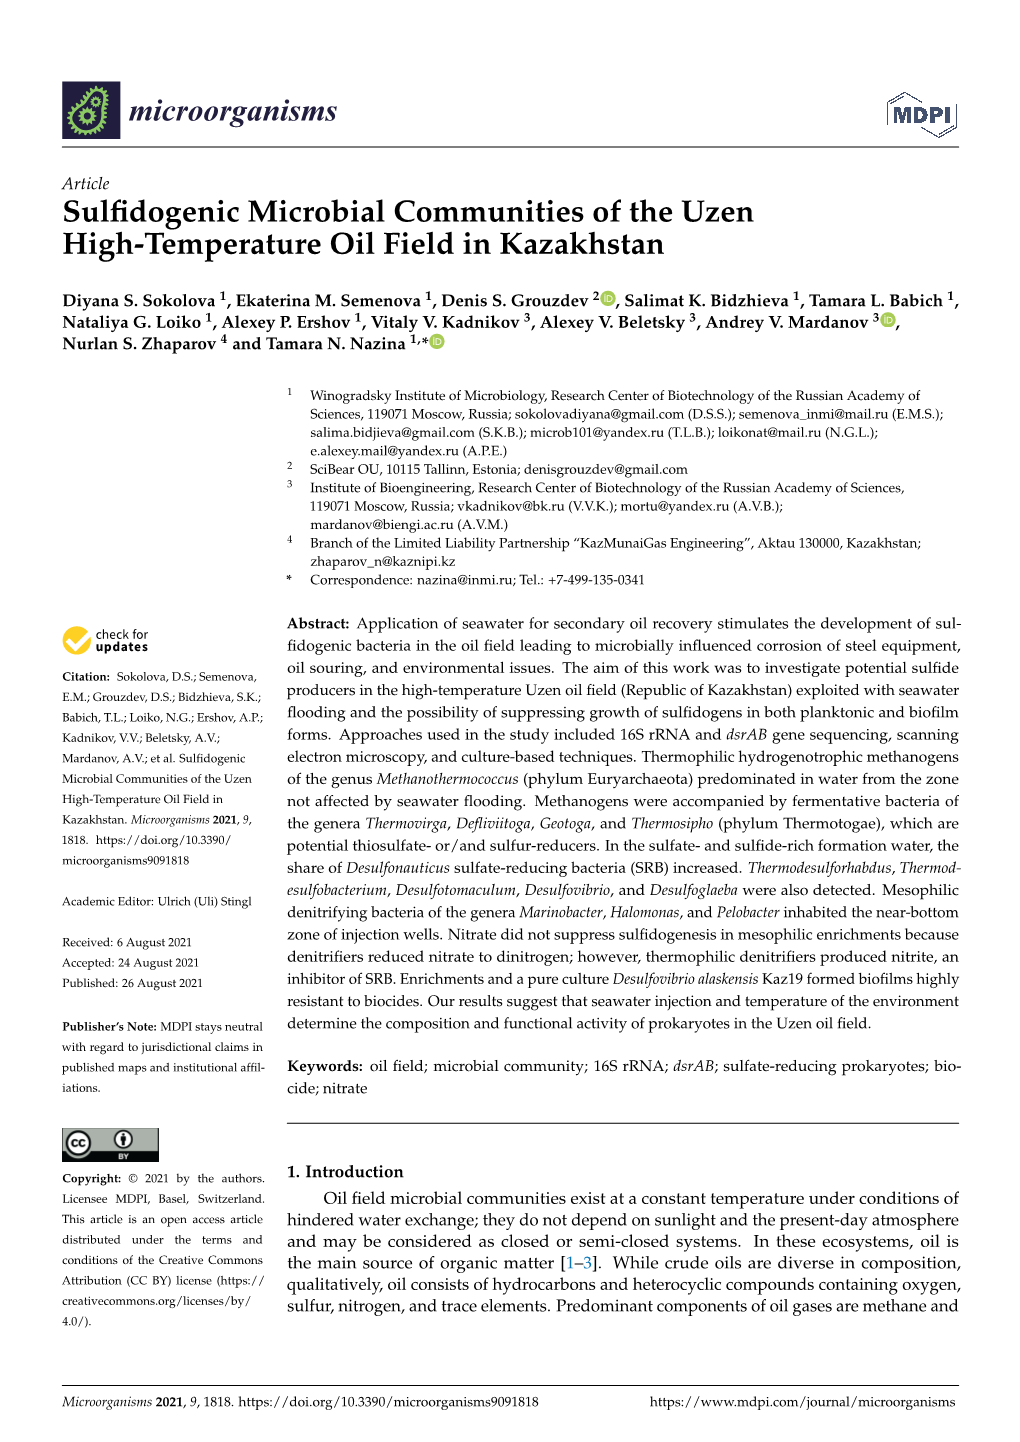 Sulfidogenic Microbial Communities of the Uzen High-Temperature Oil Field in Kazakhstan